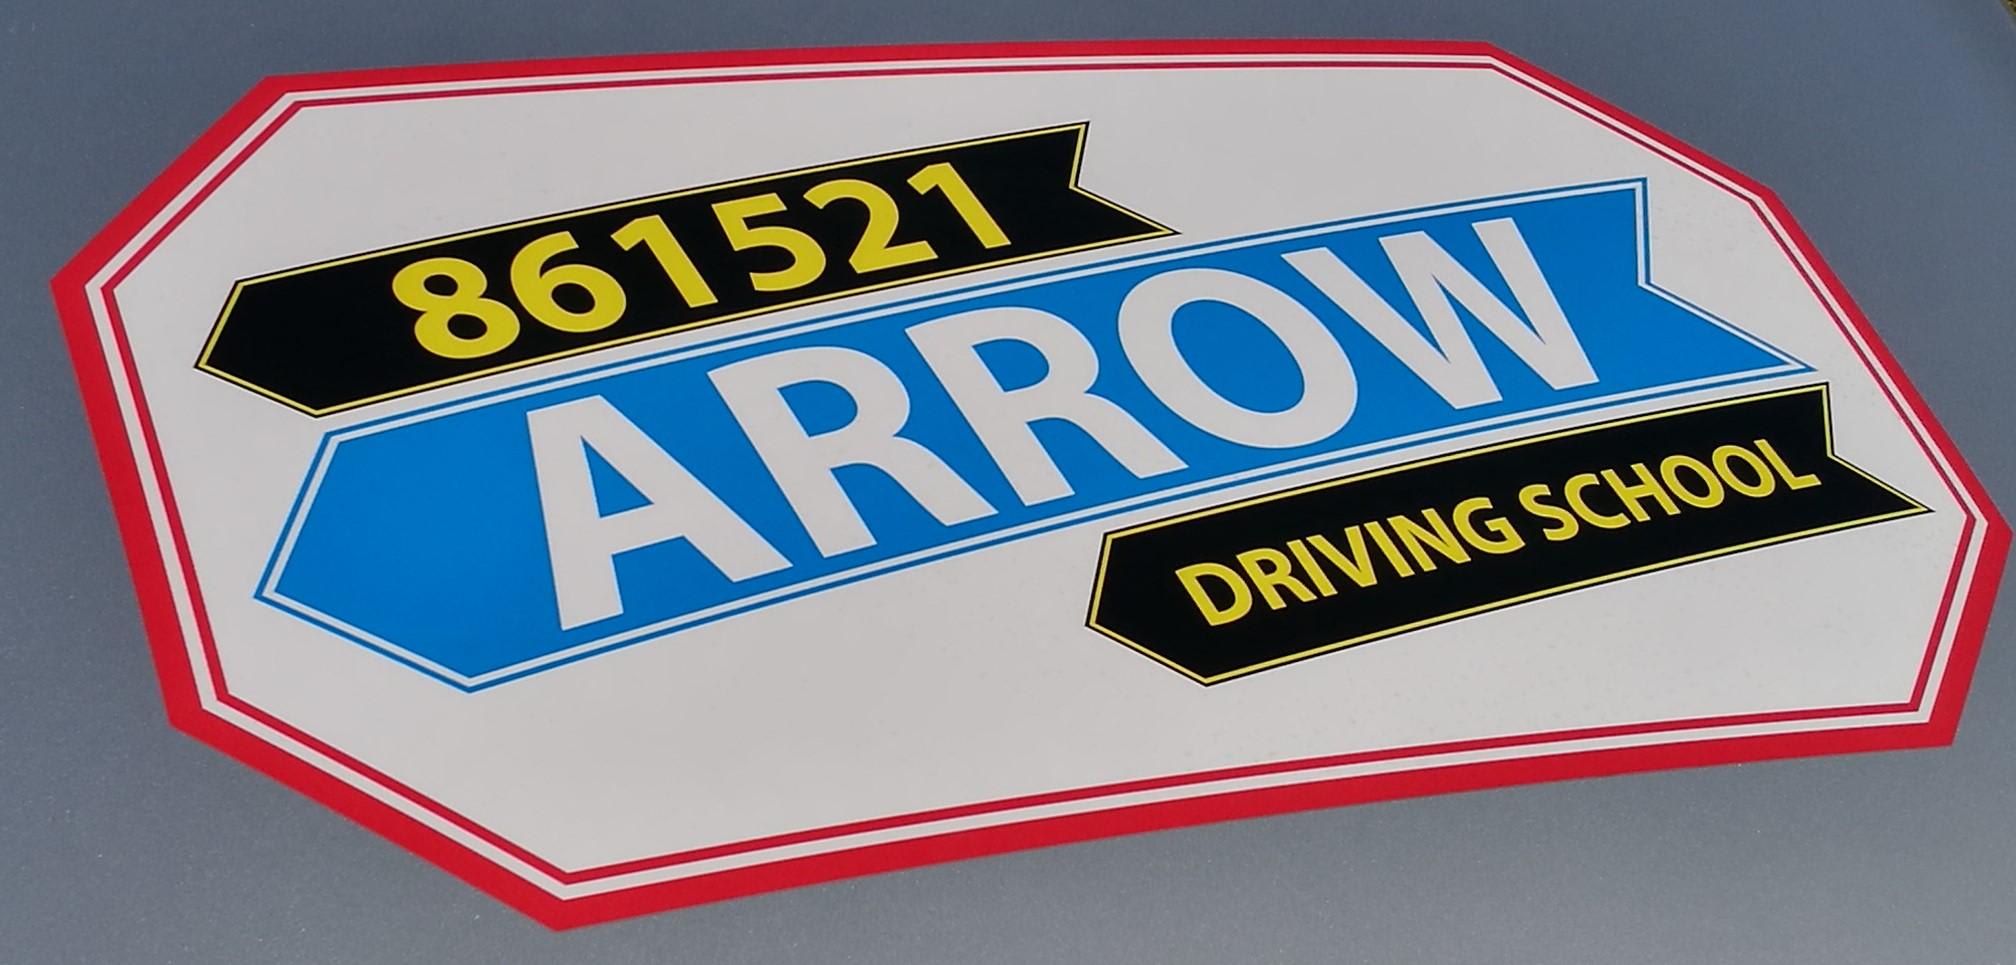 Stephen Brown Arrow Driving School Sandown 07837 397741